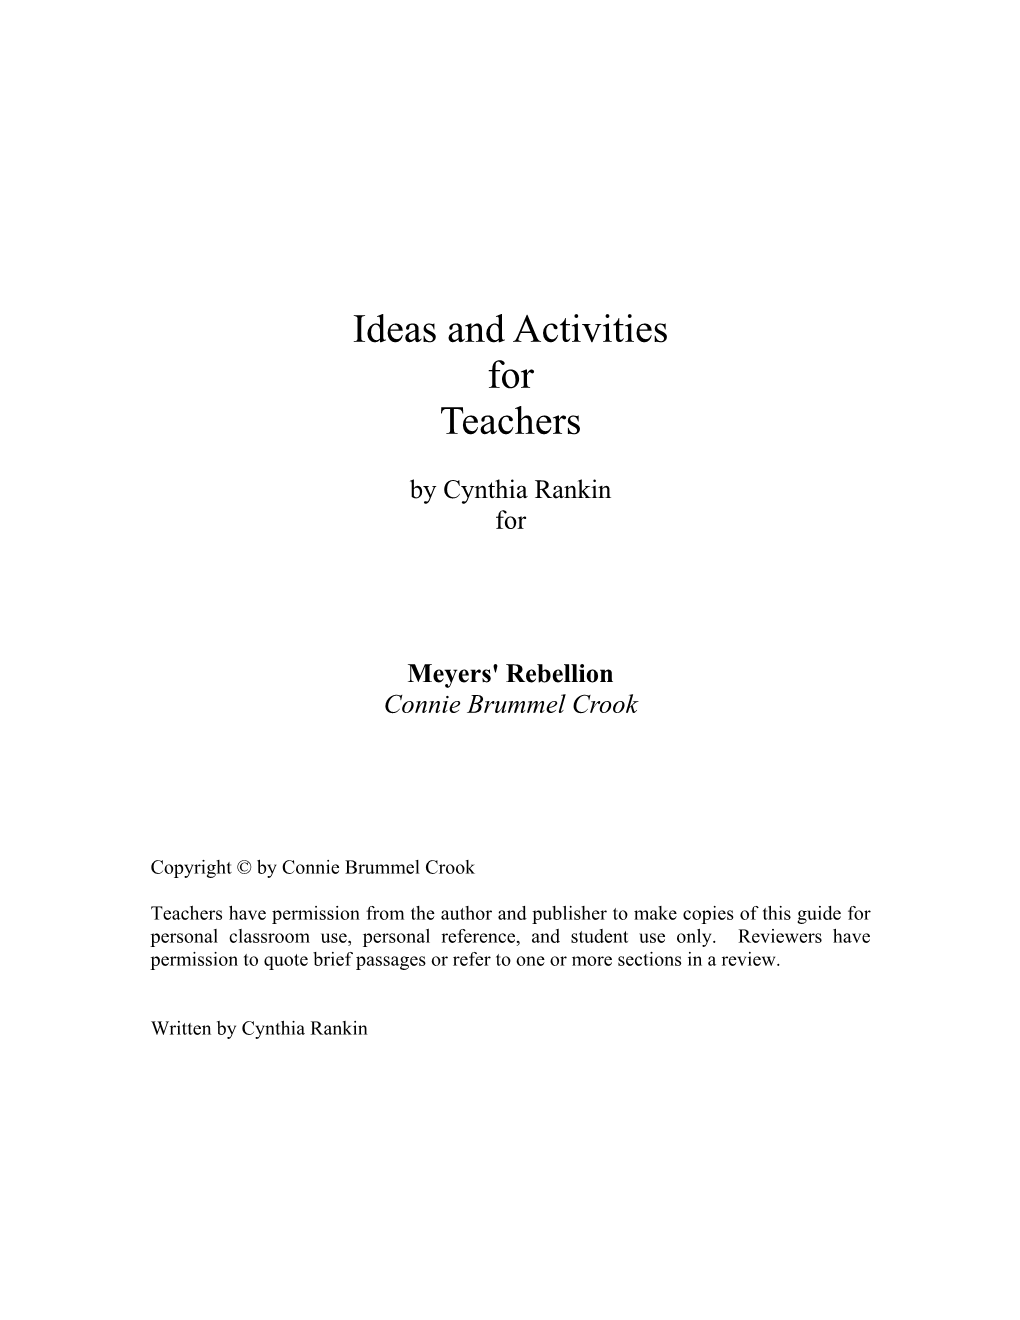 Ideas and Activities for Teachers